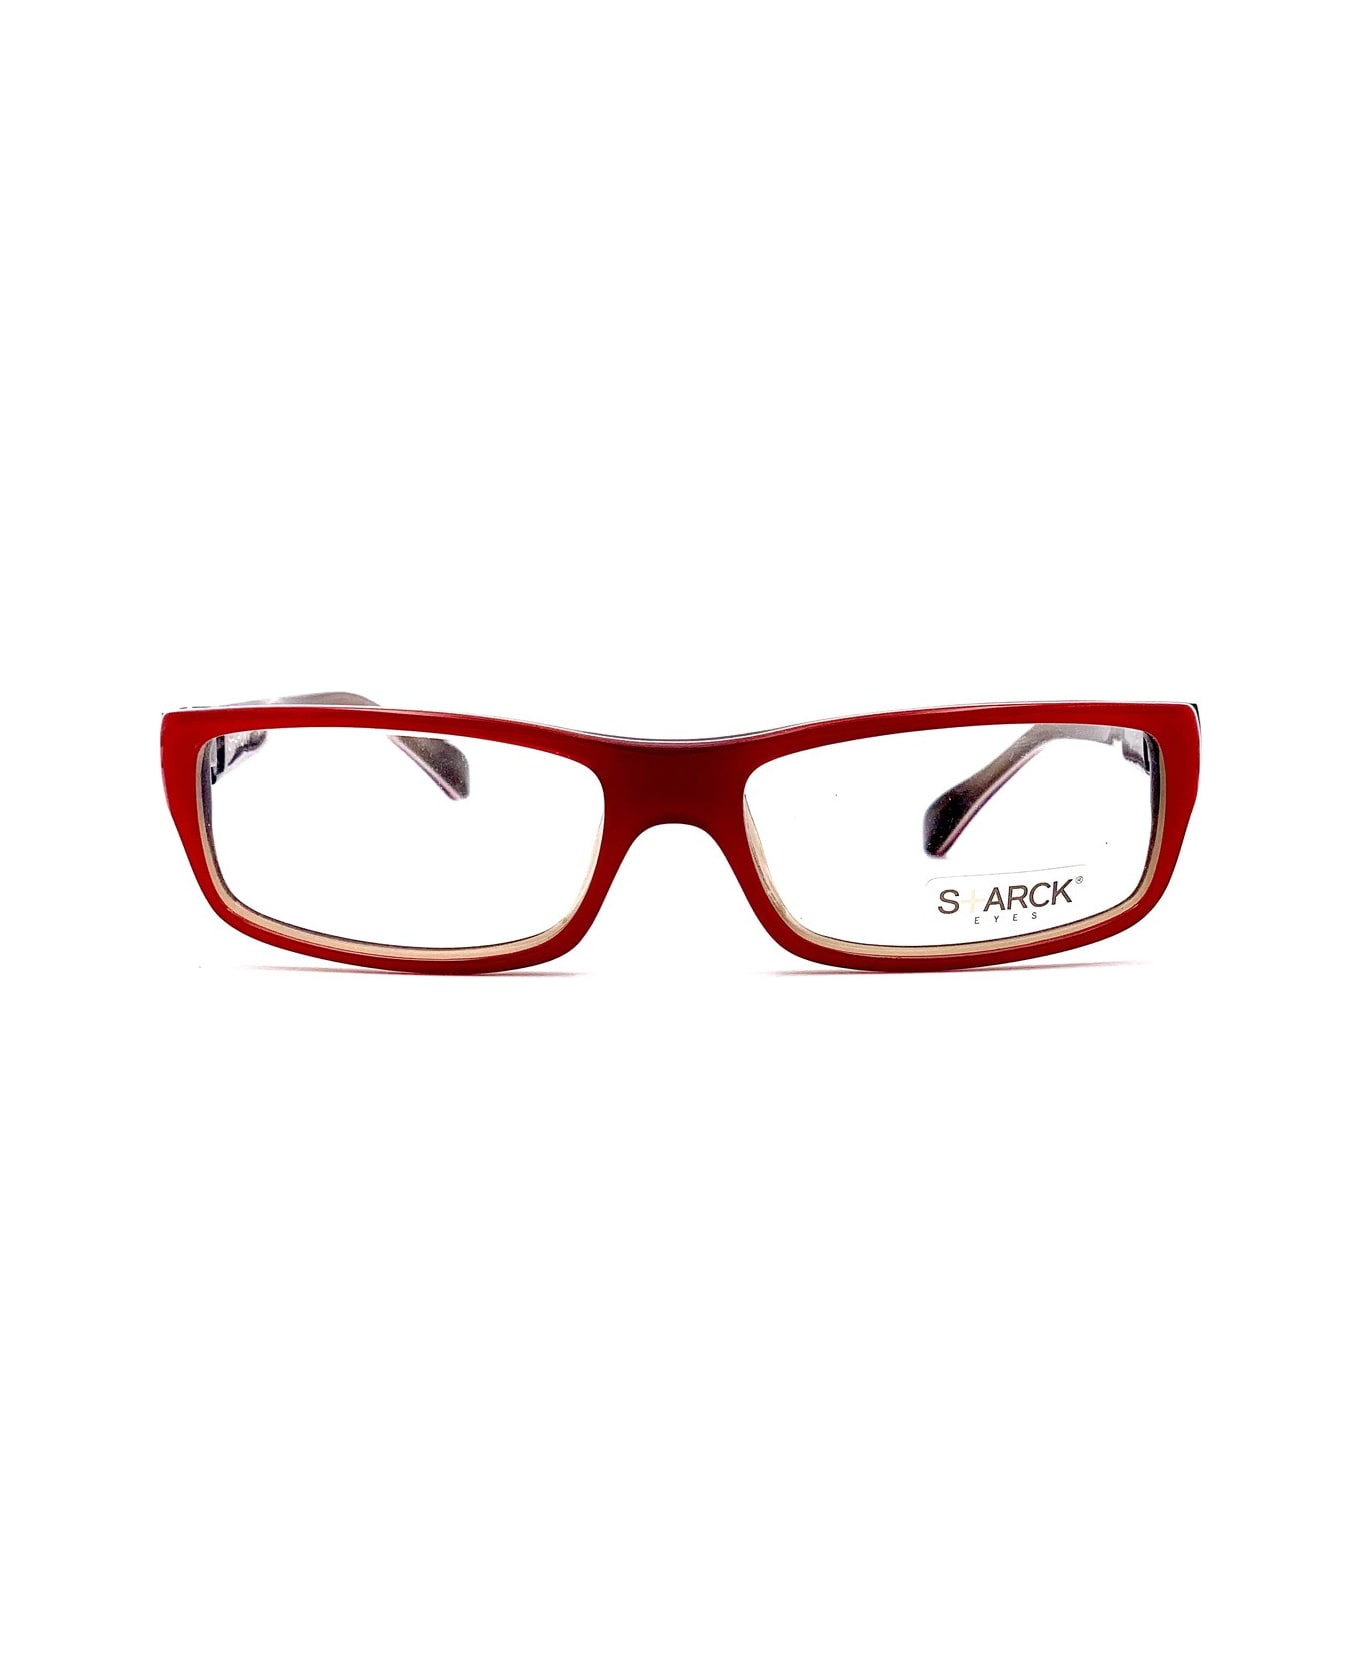 Philippe Starck P0501 Glasses - Rosso